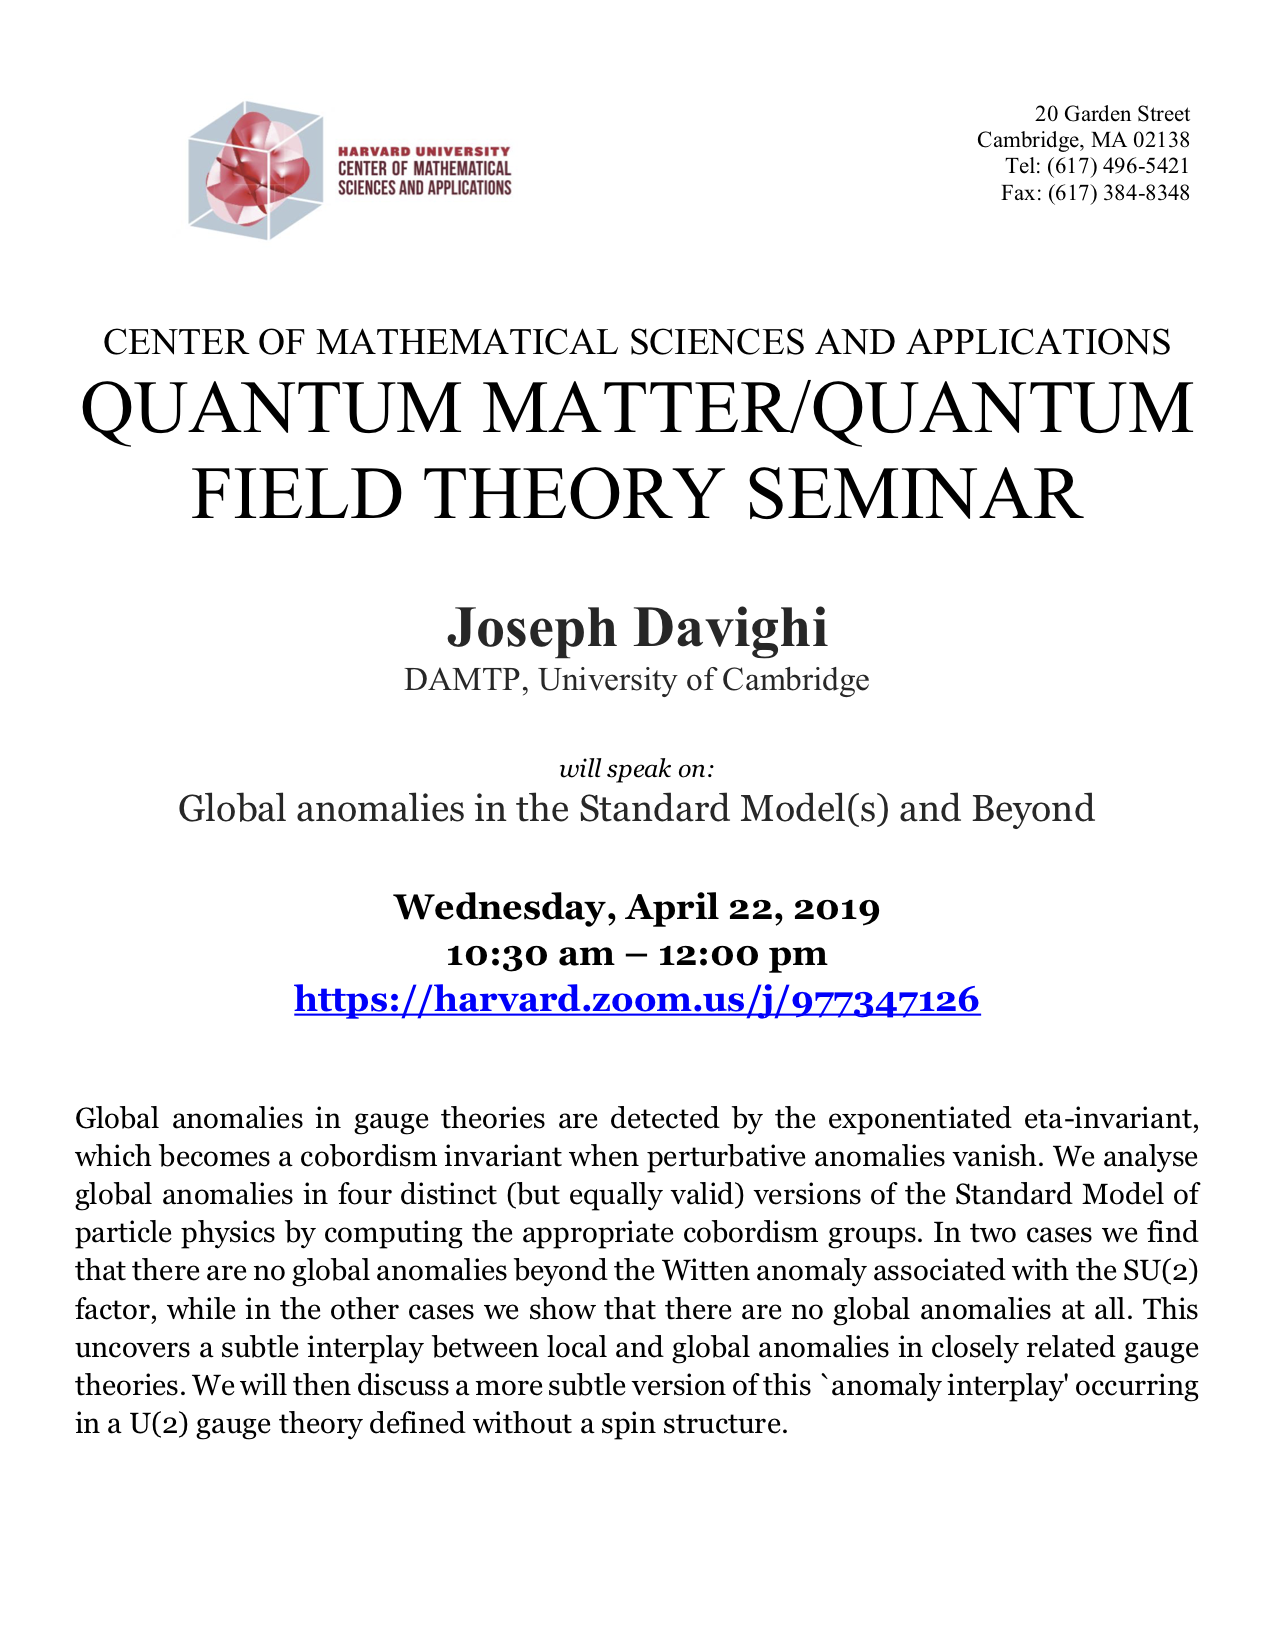 CMSA-Quantum-Matter_Quantum-Field-Theory-seminar-04.22.20-1